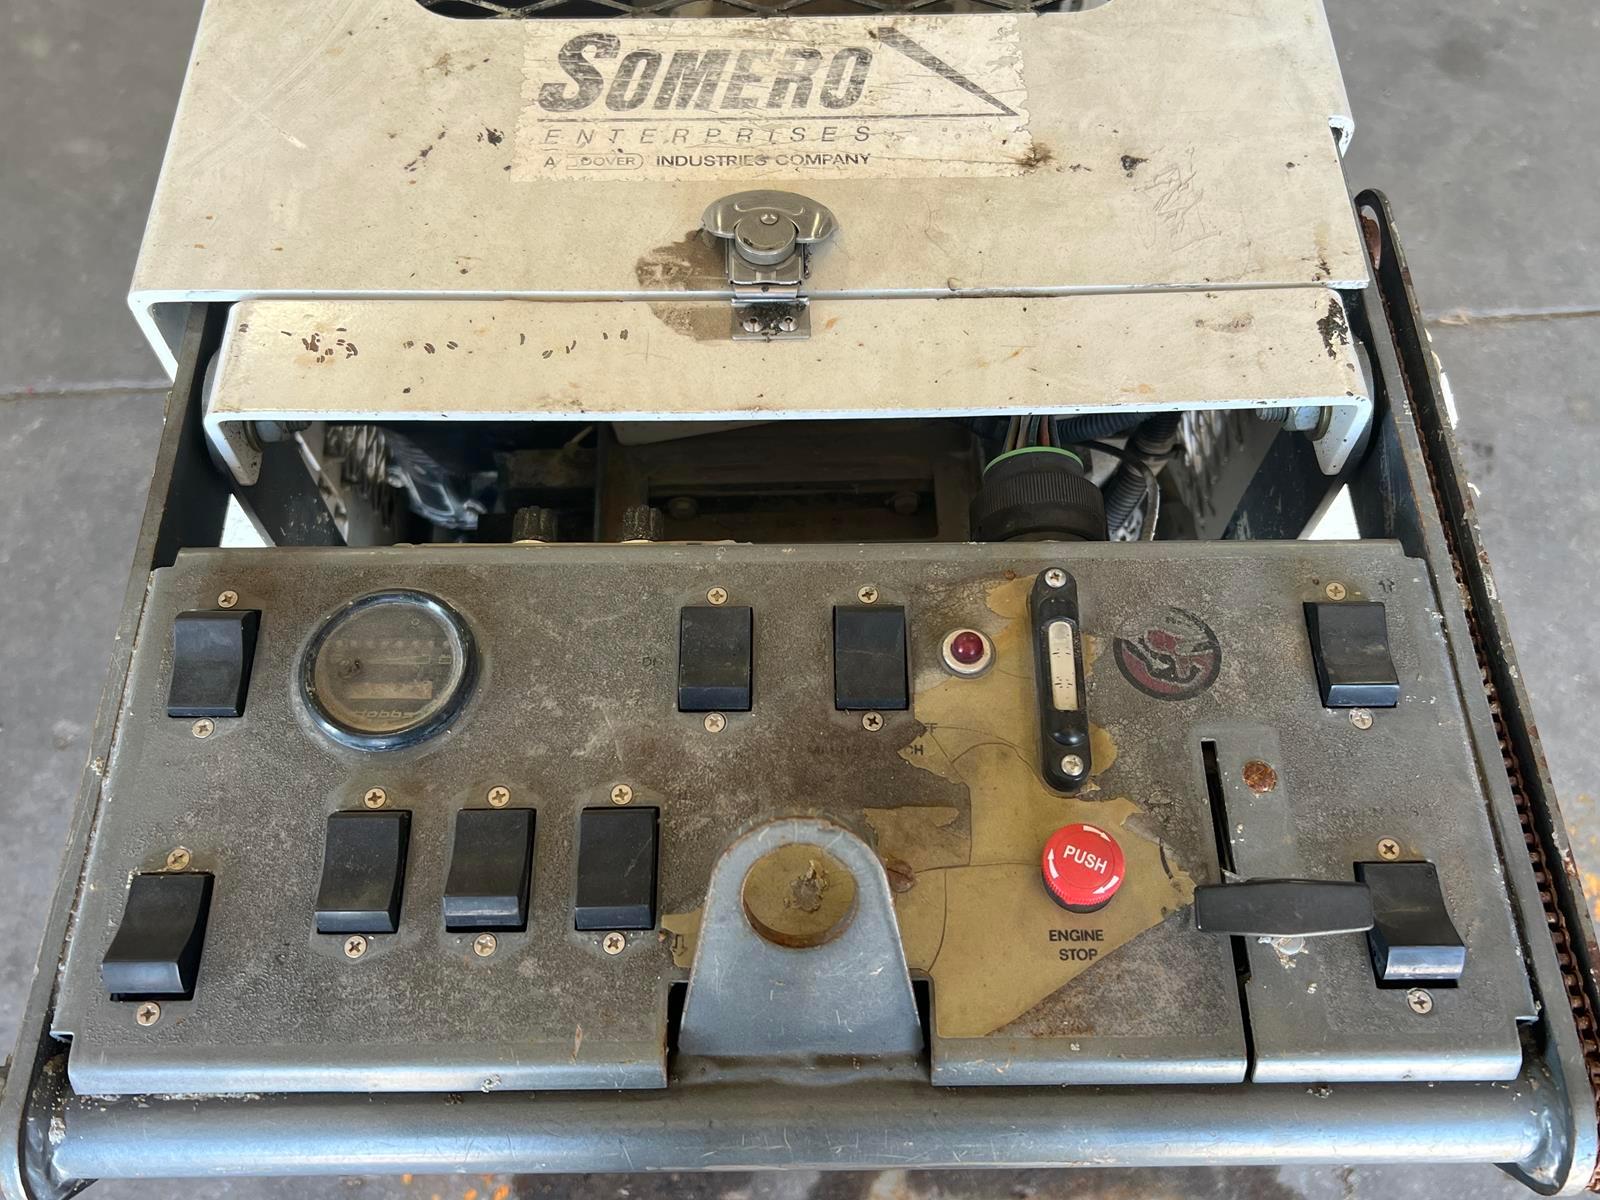 Copper Head S-9210 Laser Screed